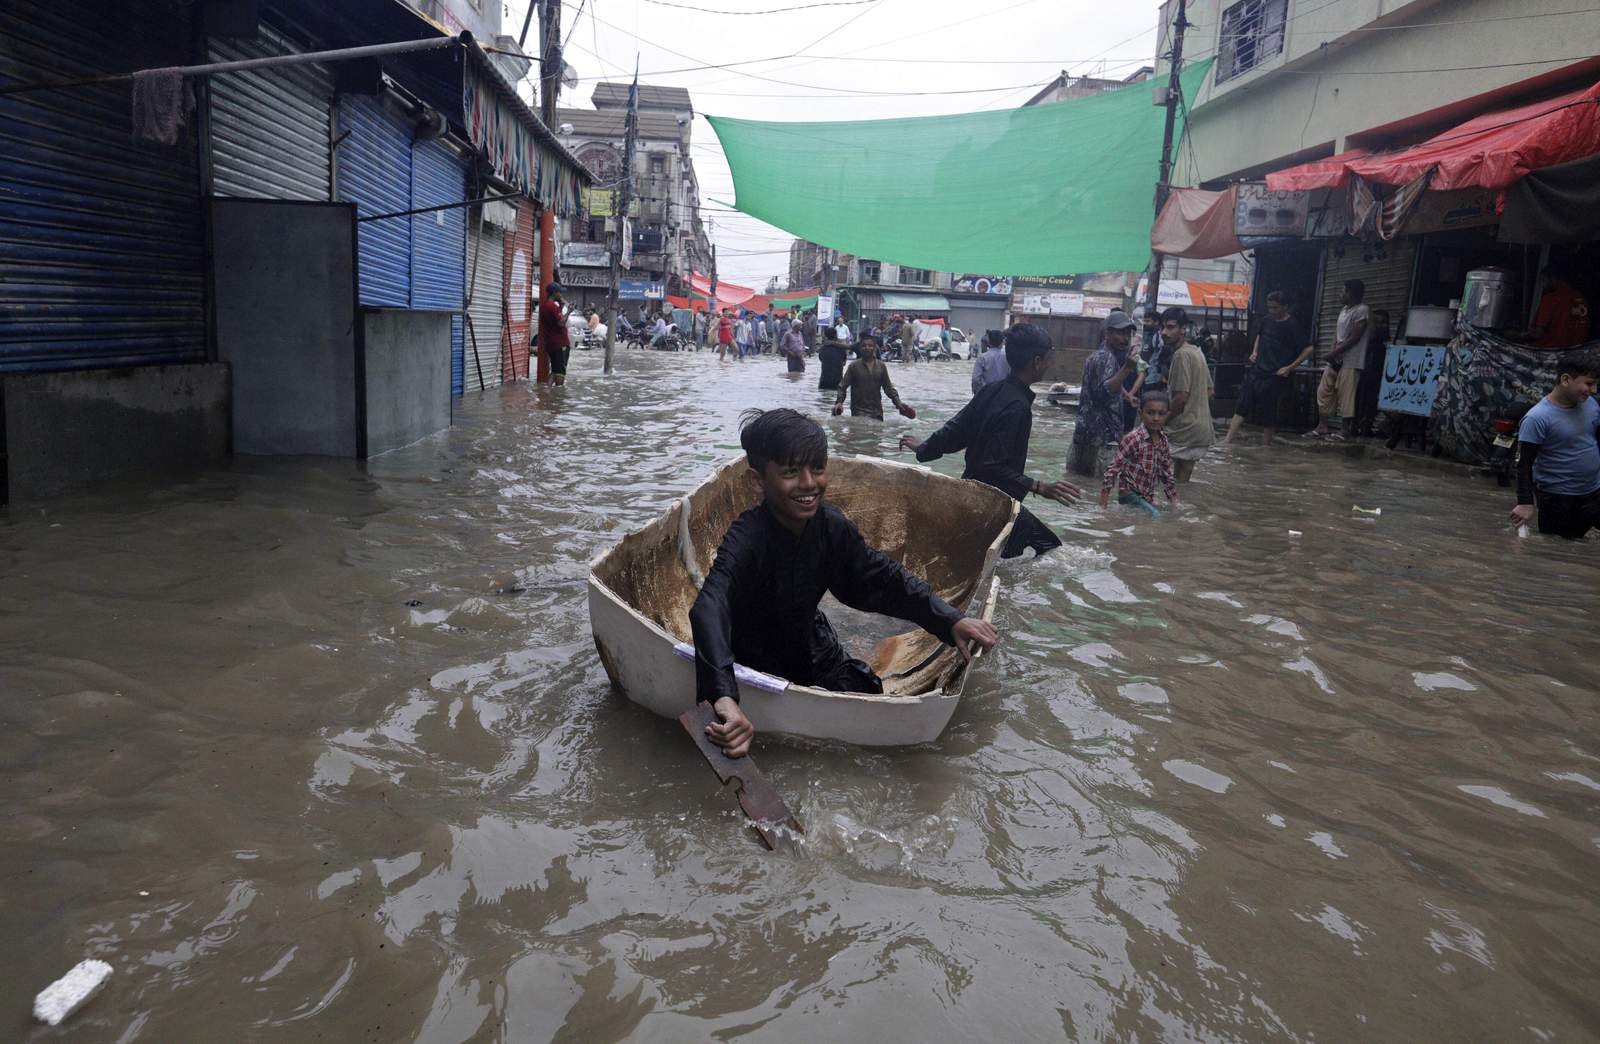 Monsoon rains wreak havoc across Pakistan, killing 63 people